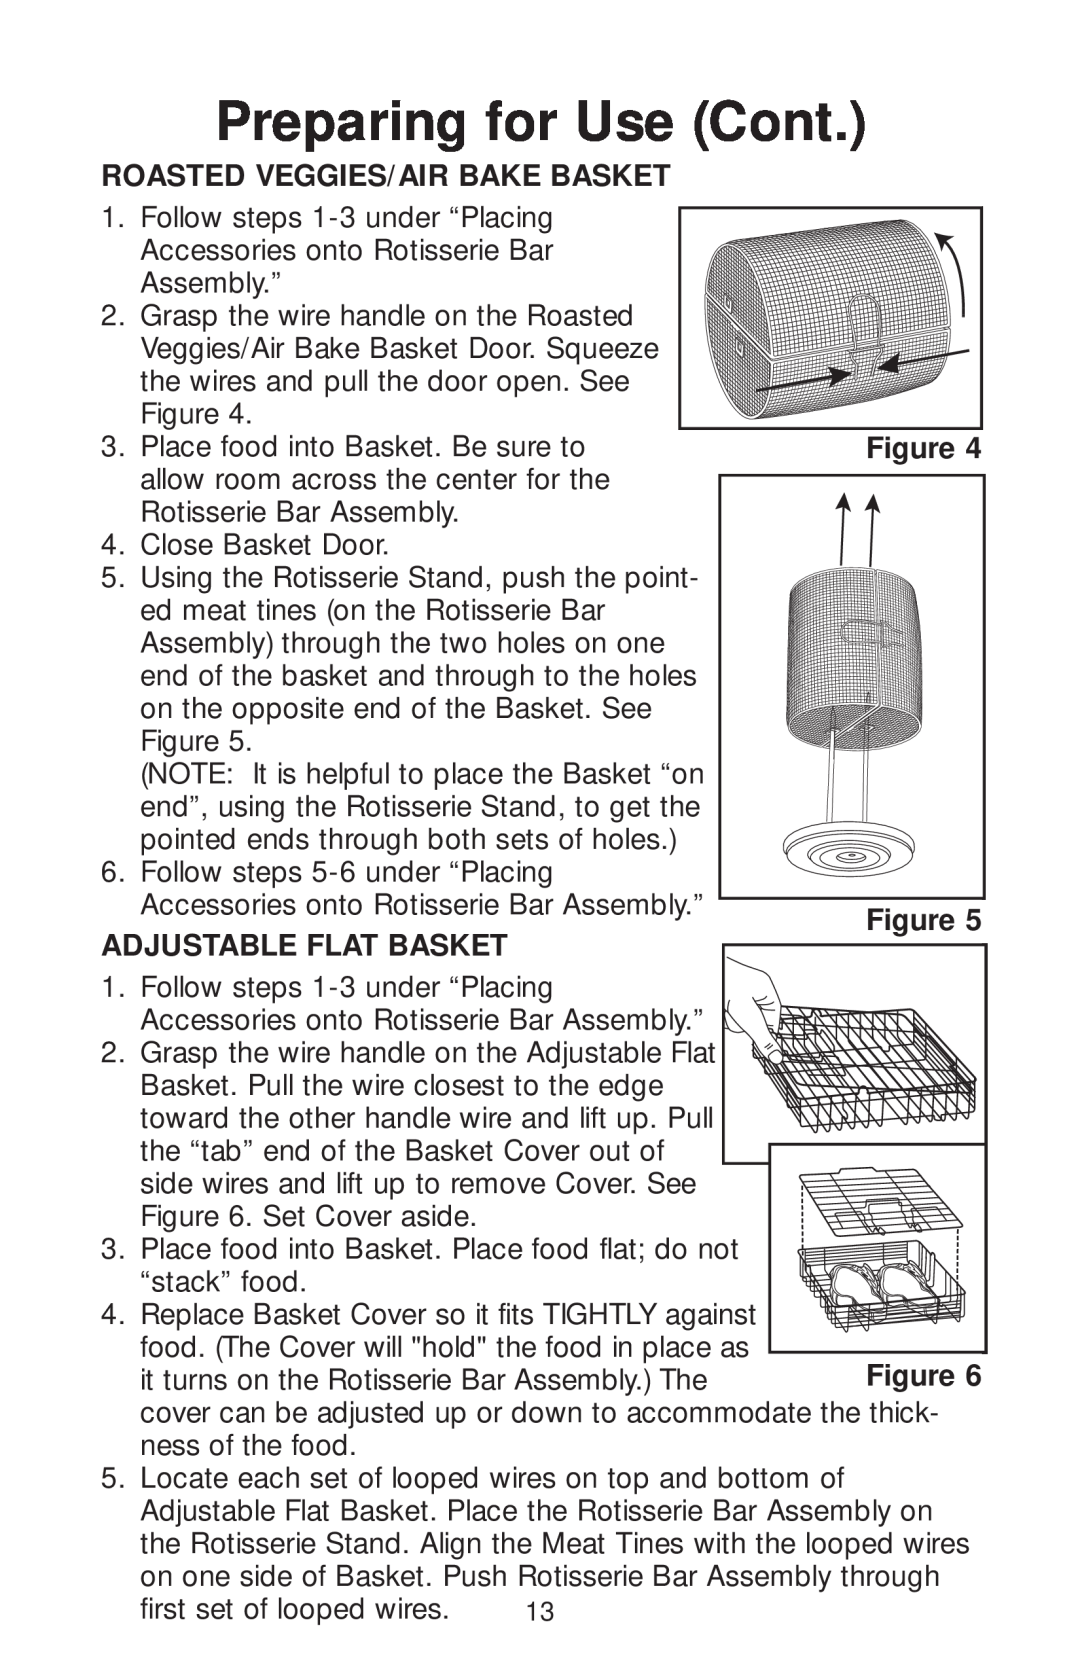 Salton GR82 owner manual Roasted Veggies/Air Bake Basket, Adjustable Flat Basket, Preparing for Use Cont 